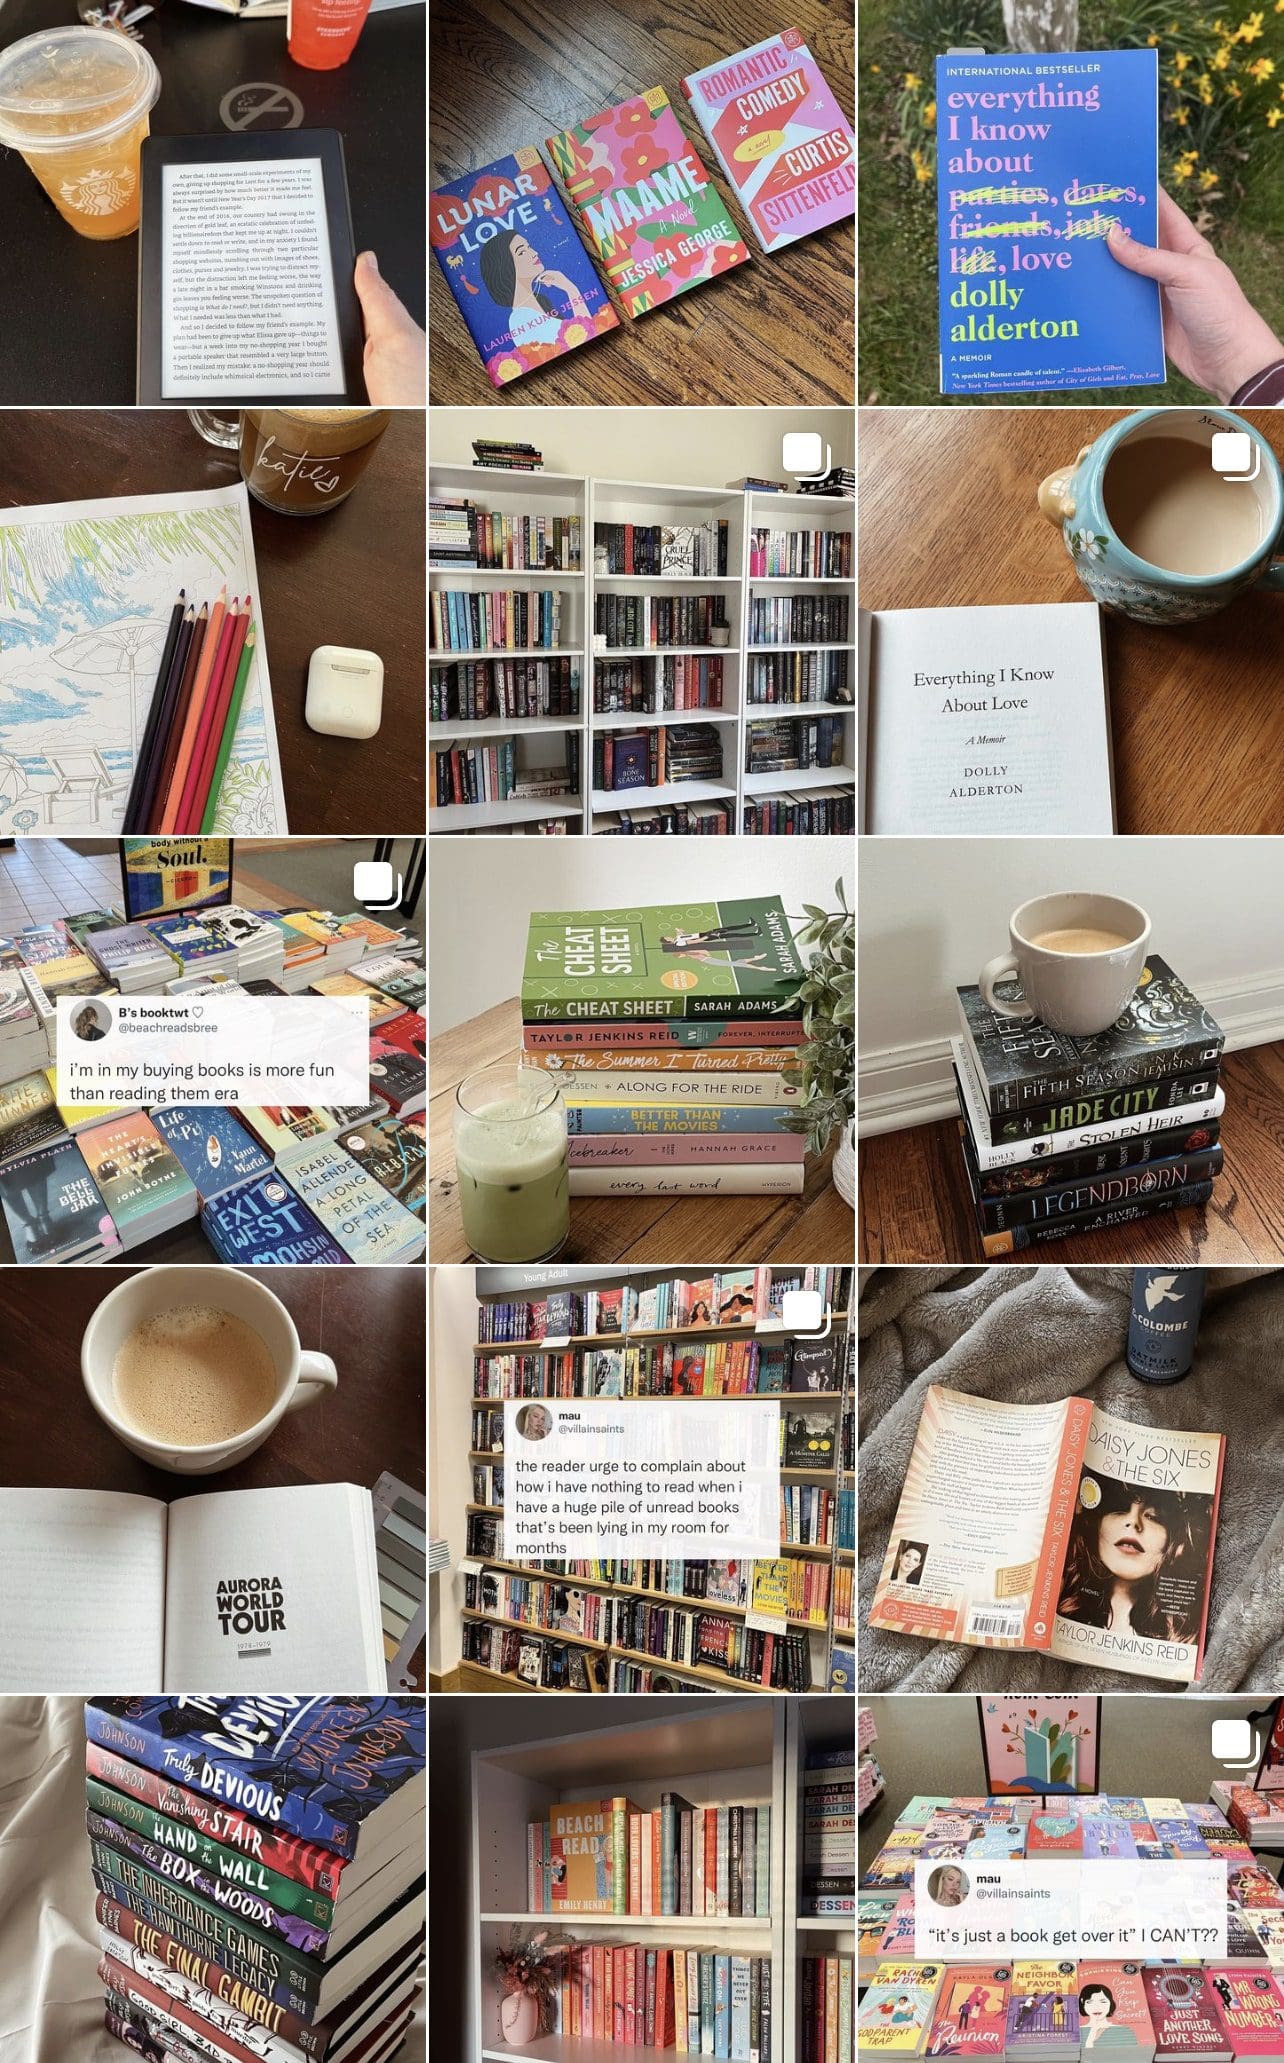 Instagram Account:@paperbacksandicedcoffee